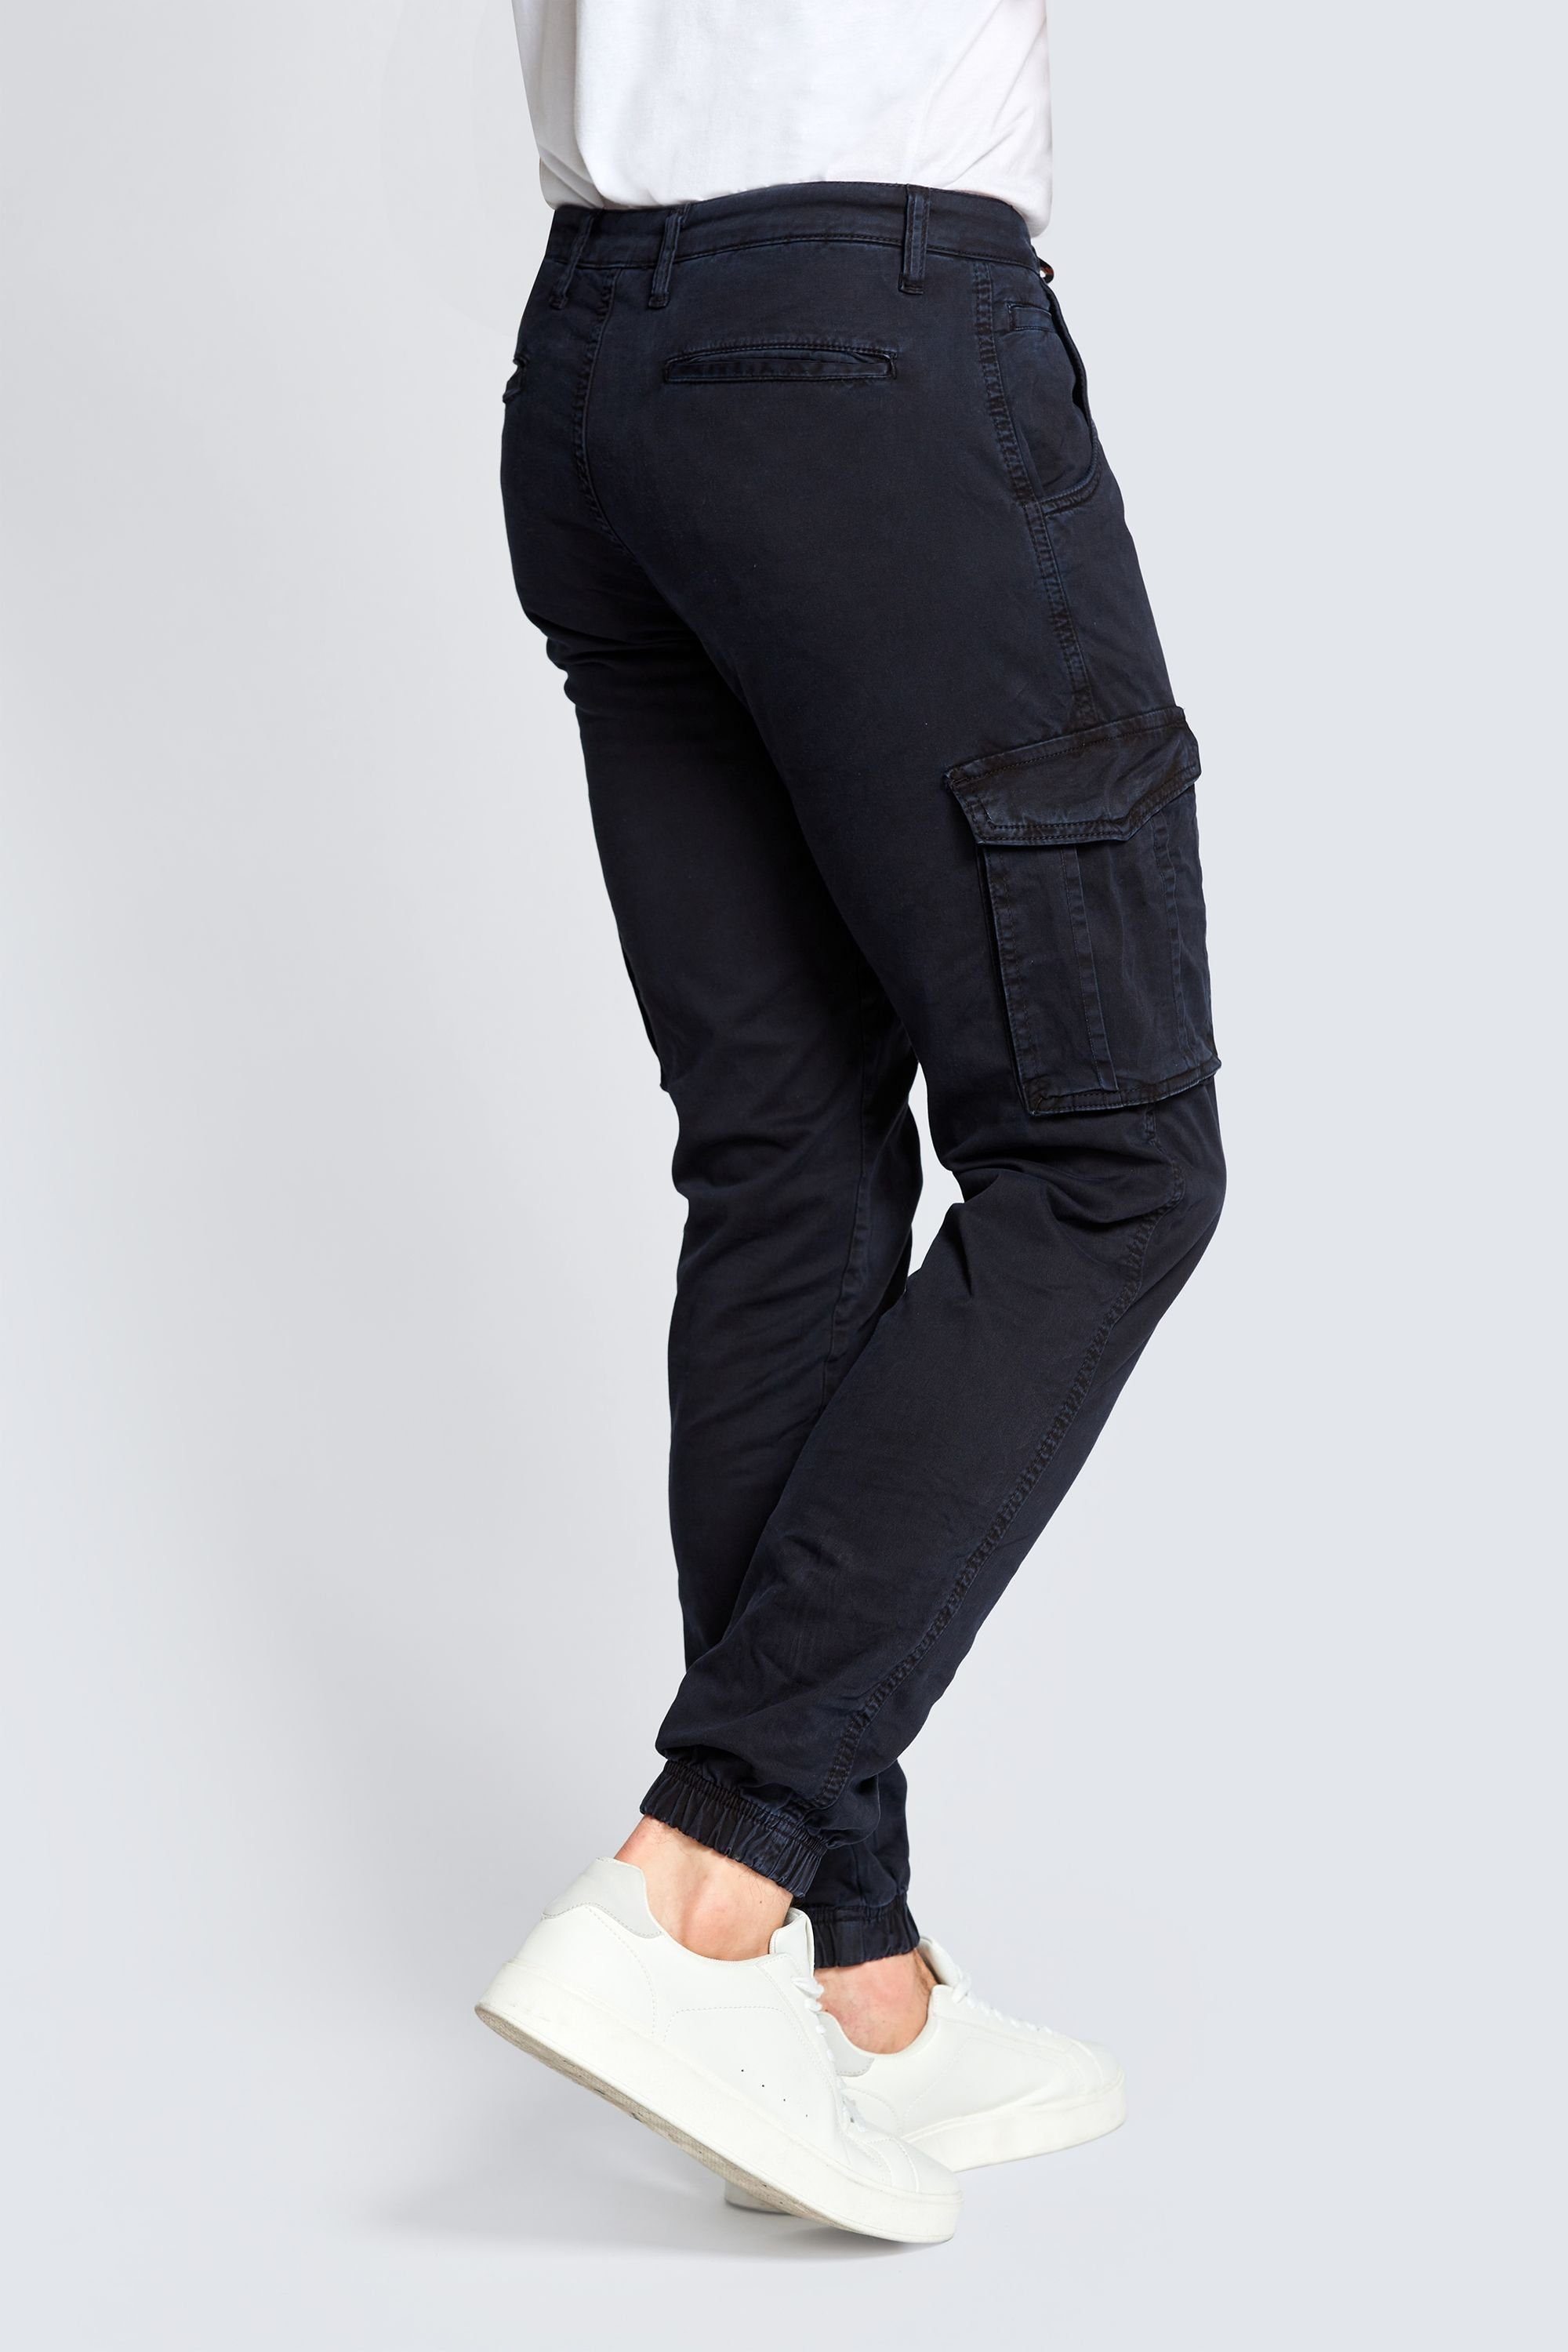 Black 5-Pocket-Jeans angenehmer MICHA Hose Zhrill Cargo Tragekomfort